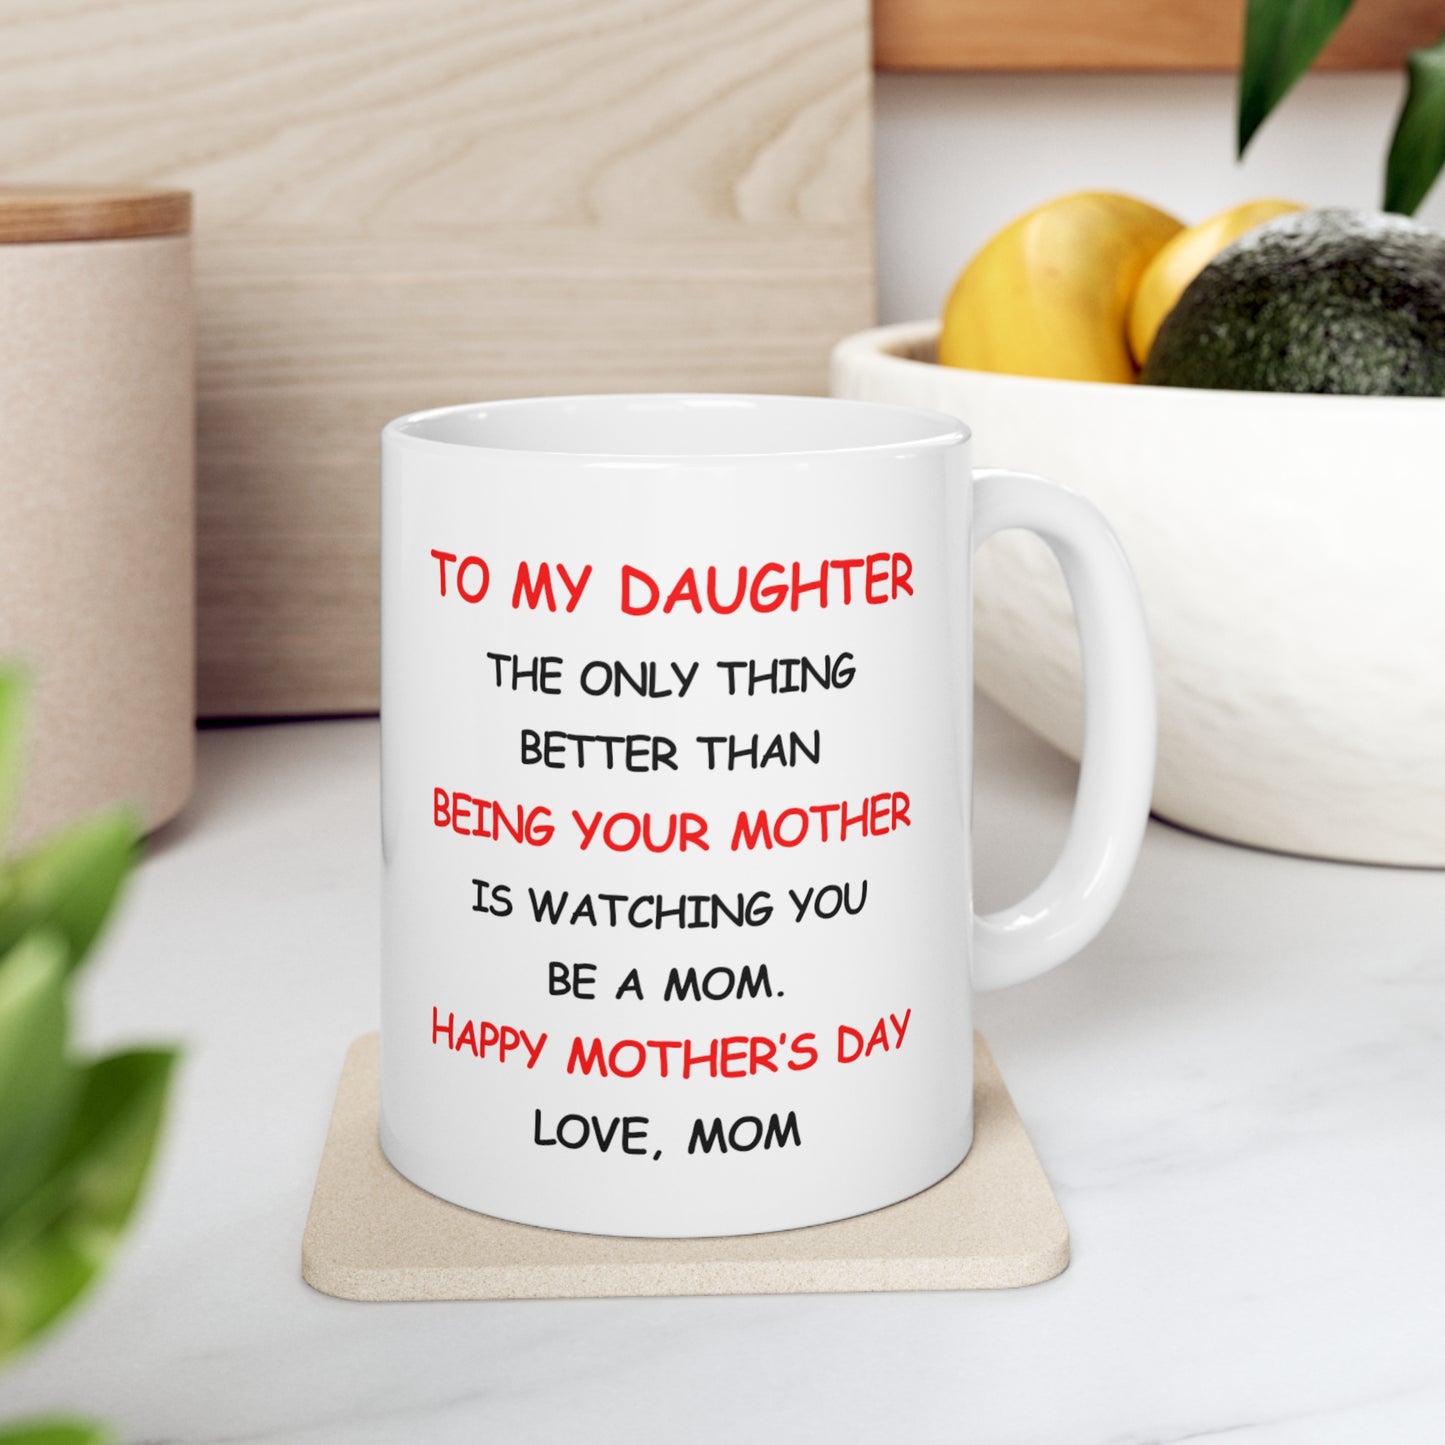 To My Daughter - Love, Mom Ceramic Mug, 11oz